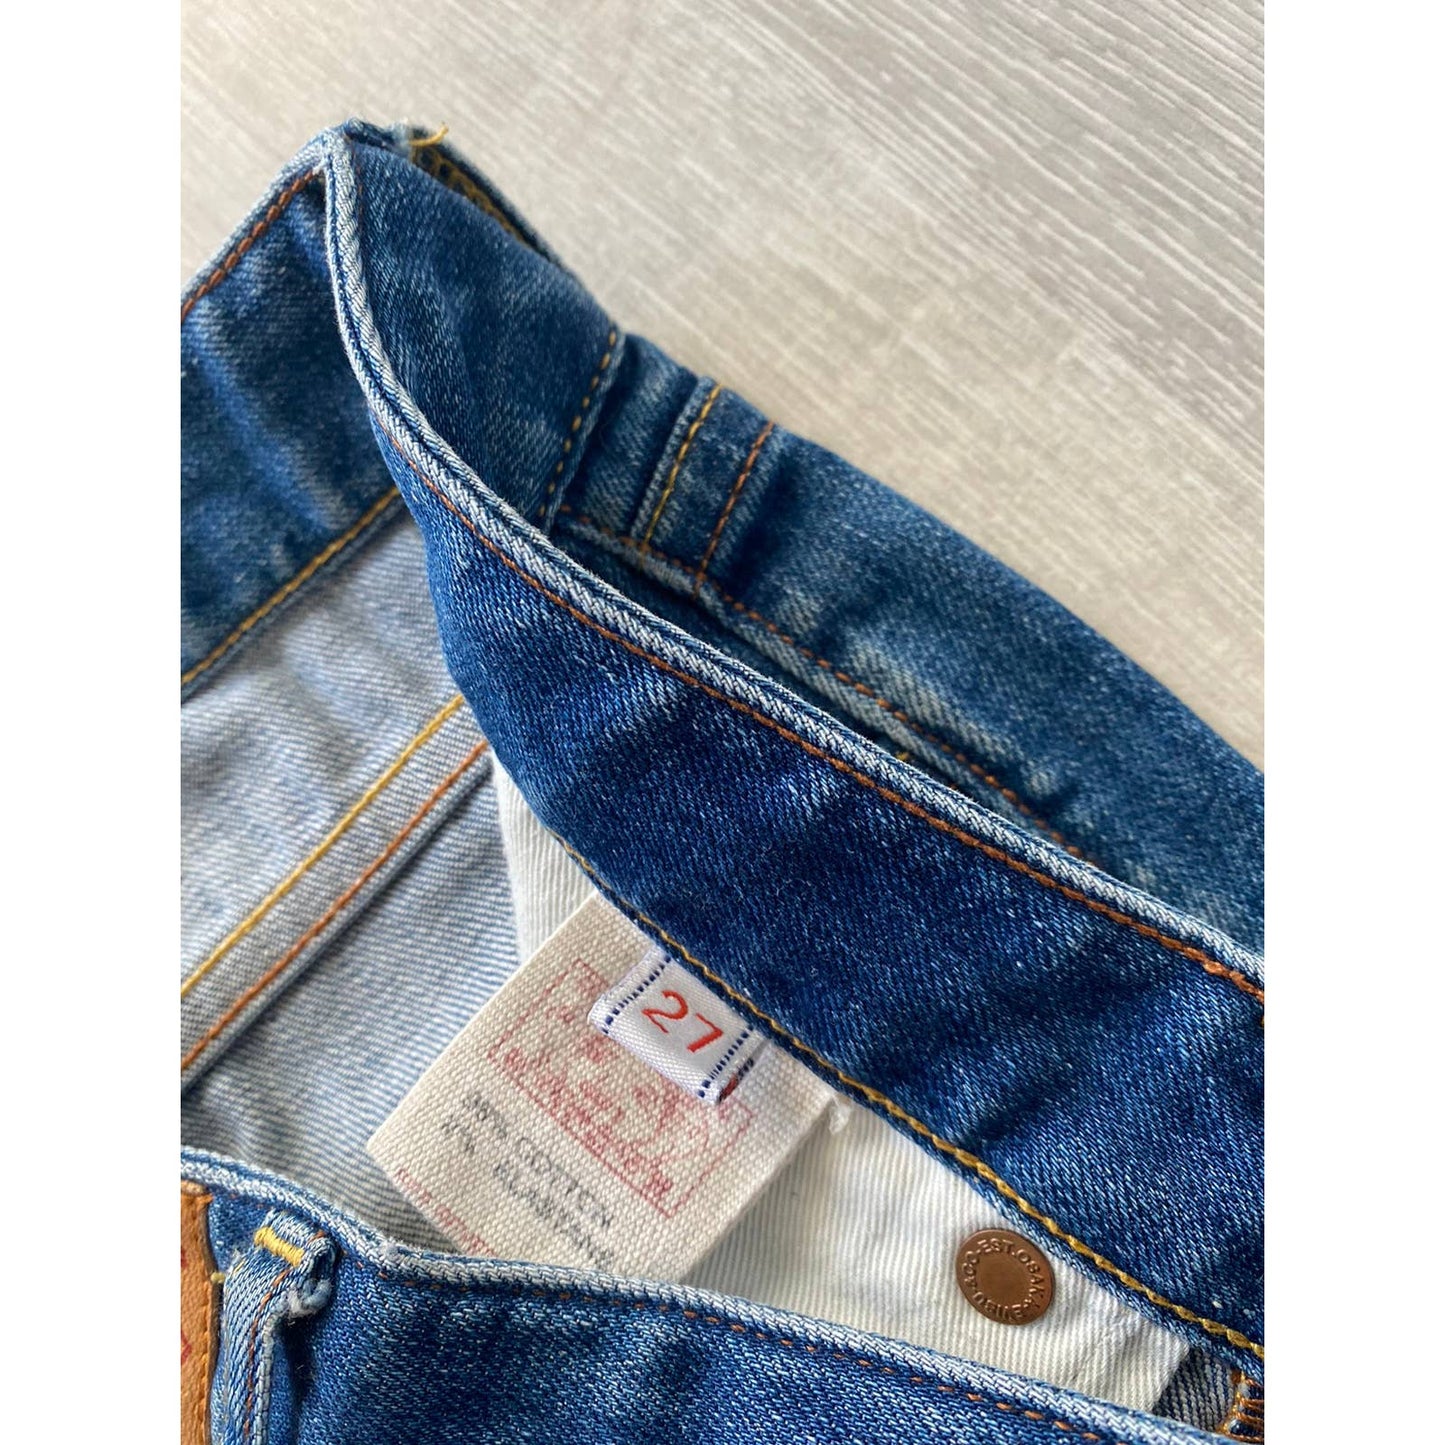 Evisu Japan vintage blue jeans no logo denim pants